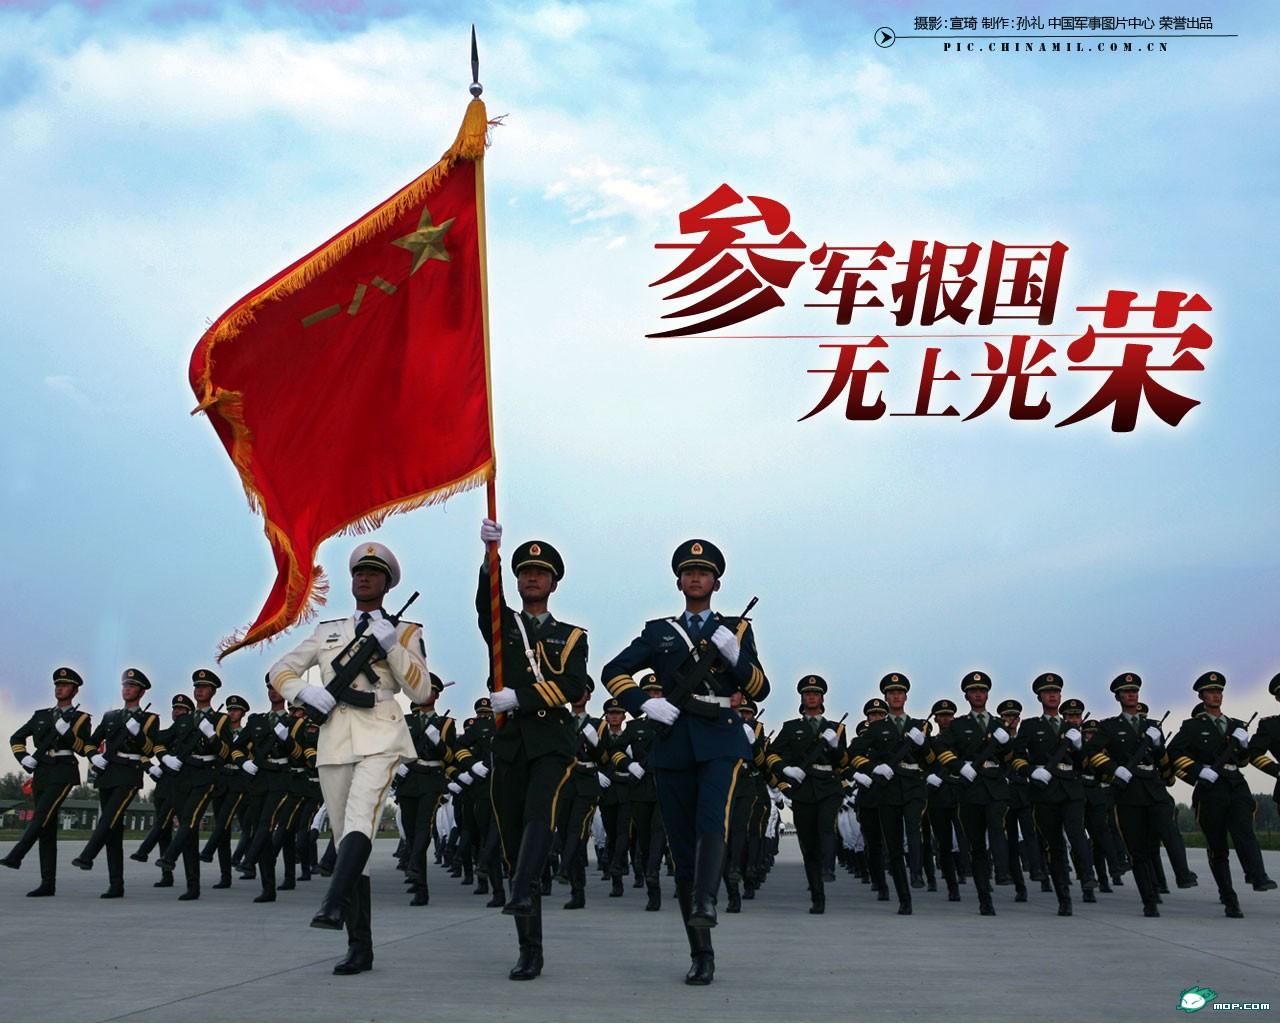 China's 2009 Military Recruitment Propaganda Posters